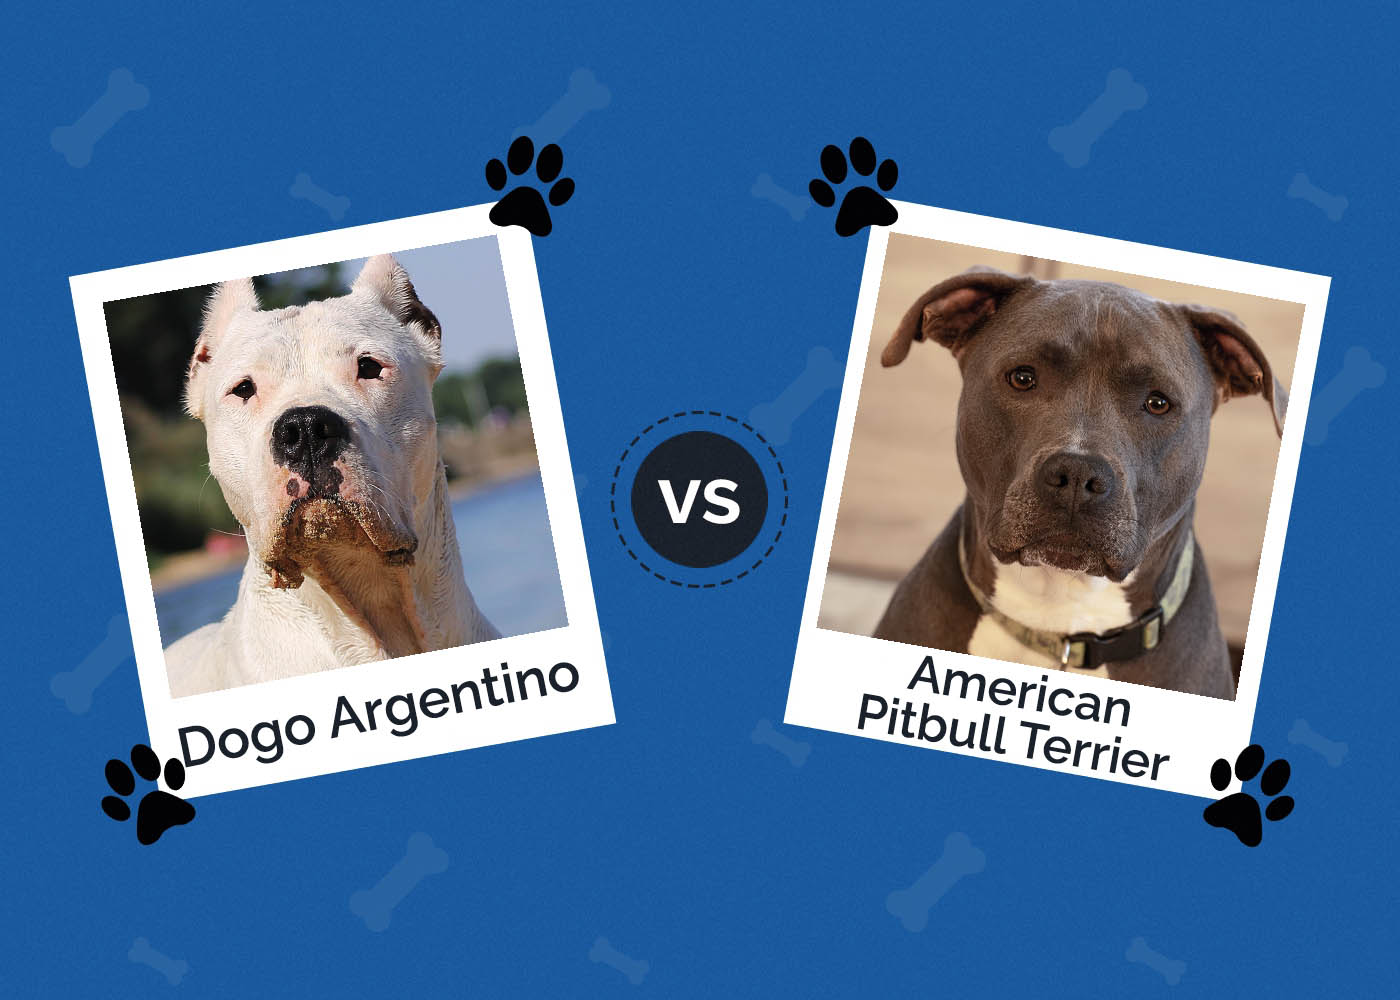 Dogo Argentino vs American Pitbull Terrier